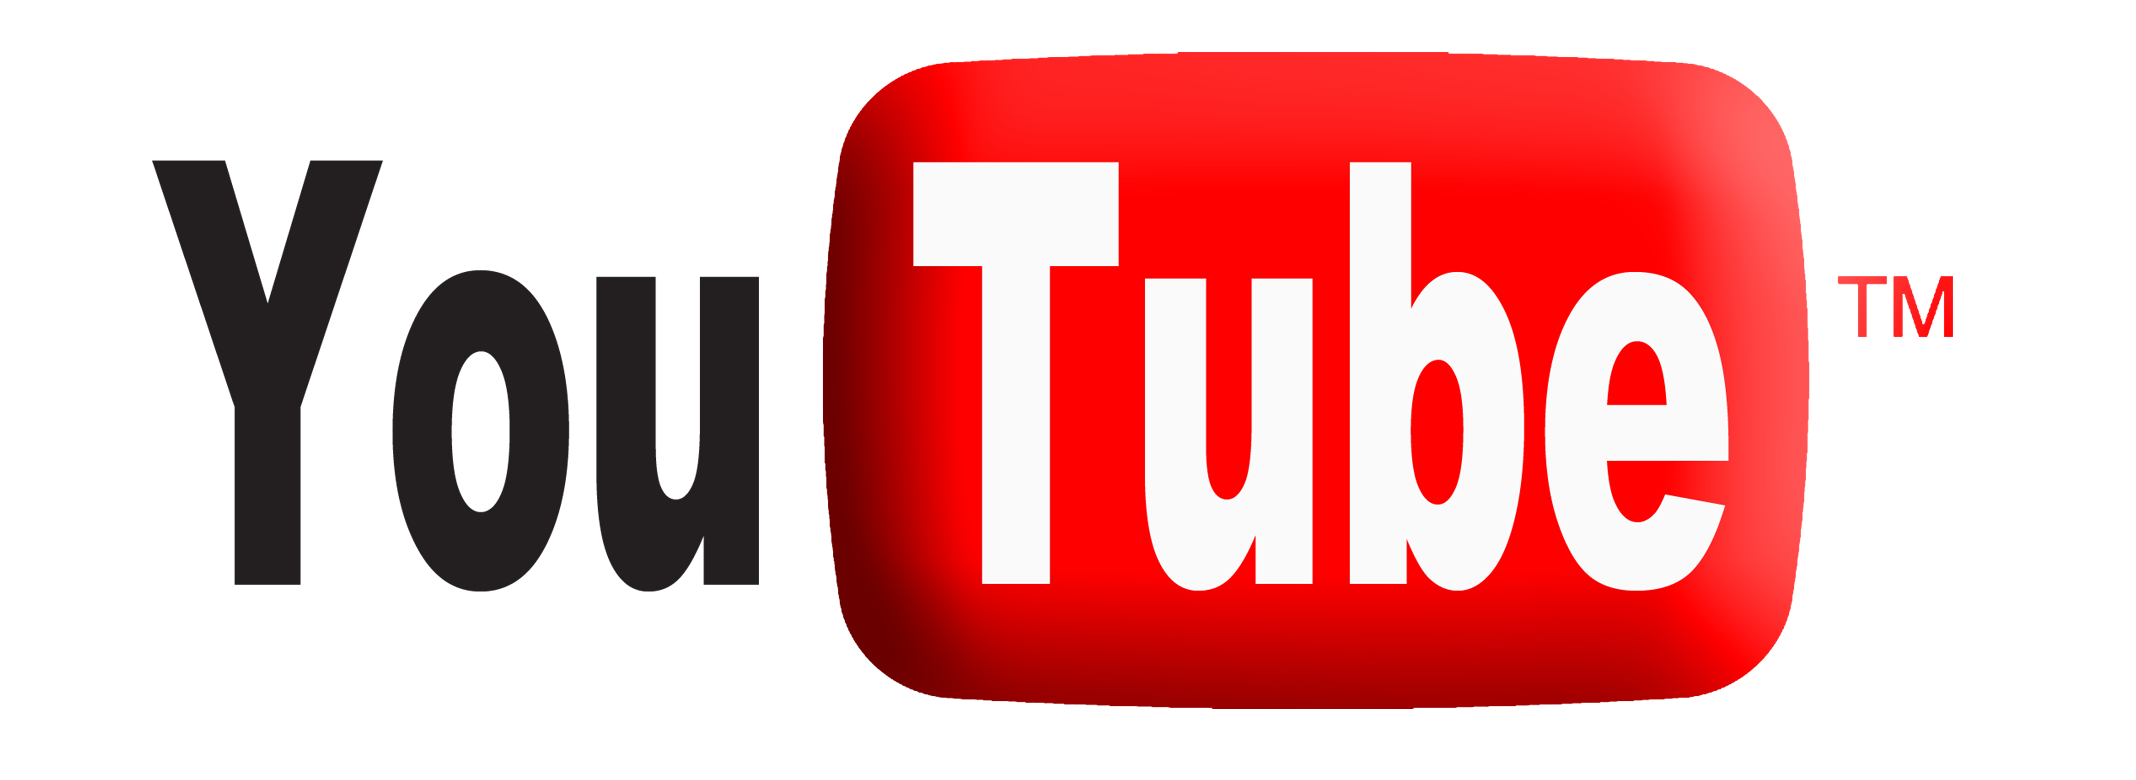 youtube logo png transparent background download